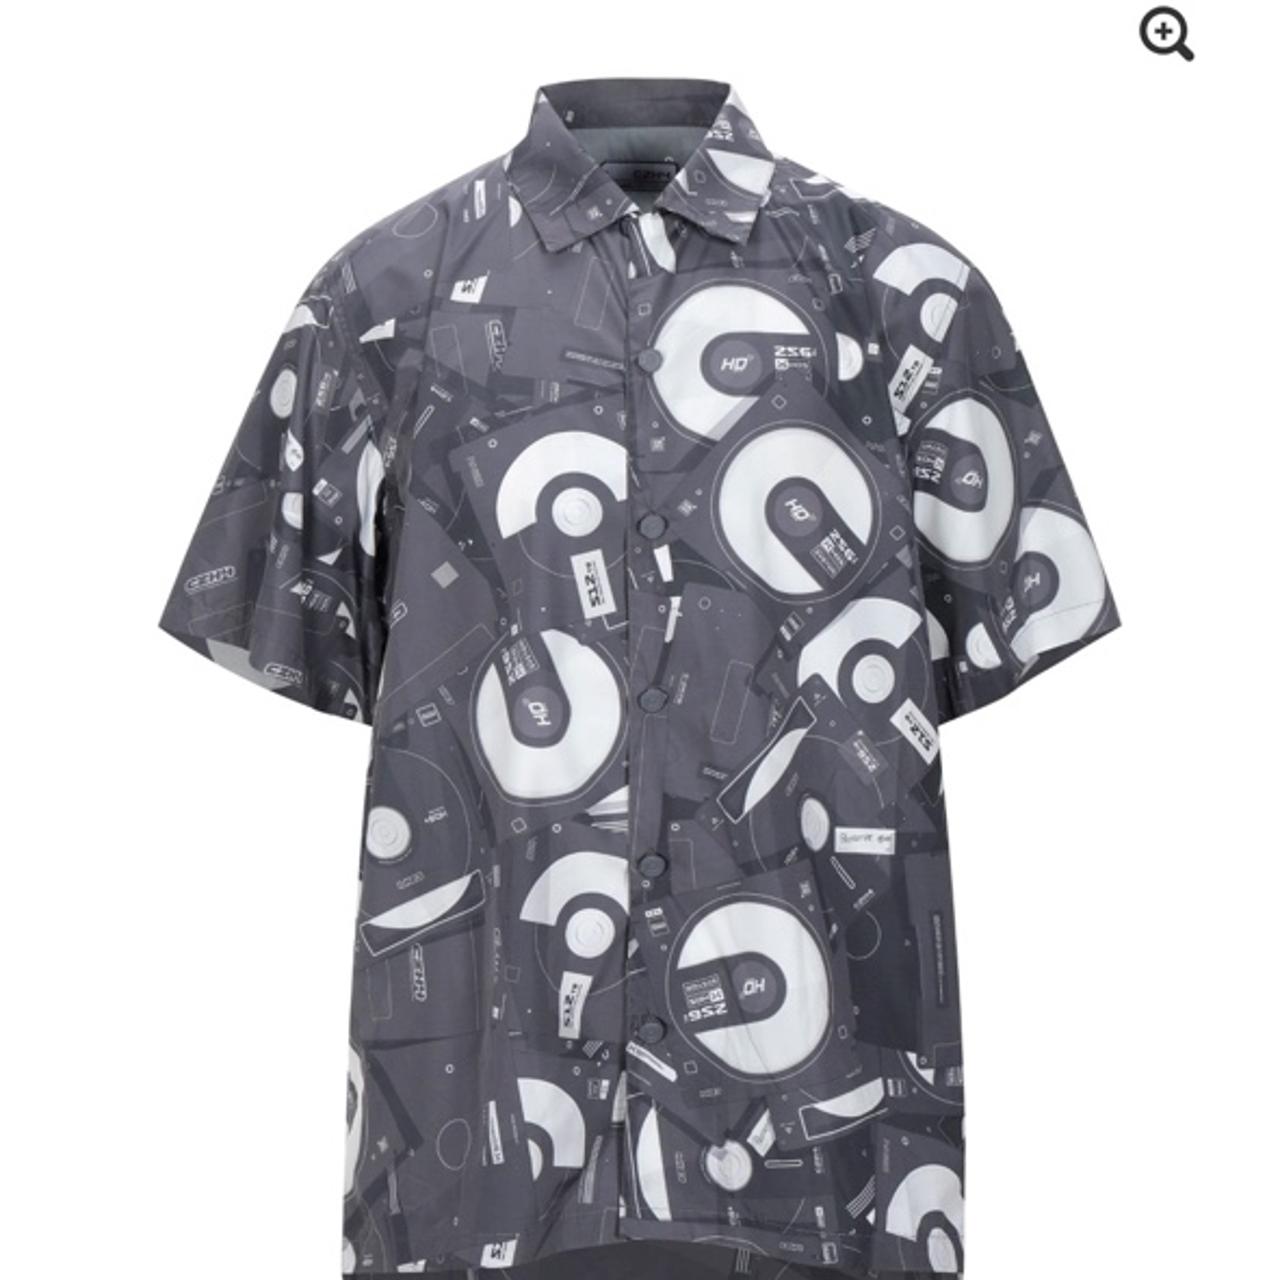 Louis Vuitton Split Hawaiian Shirt